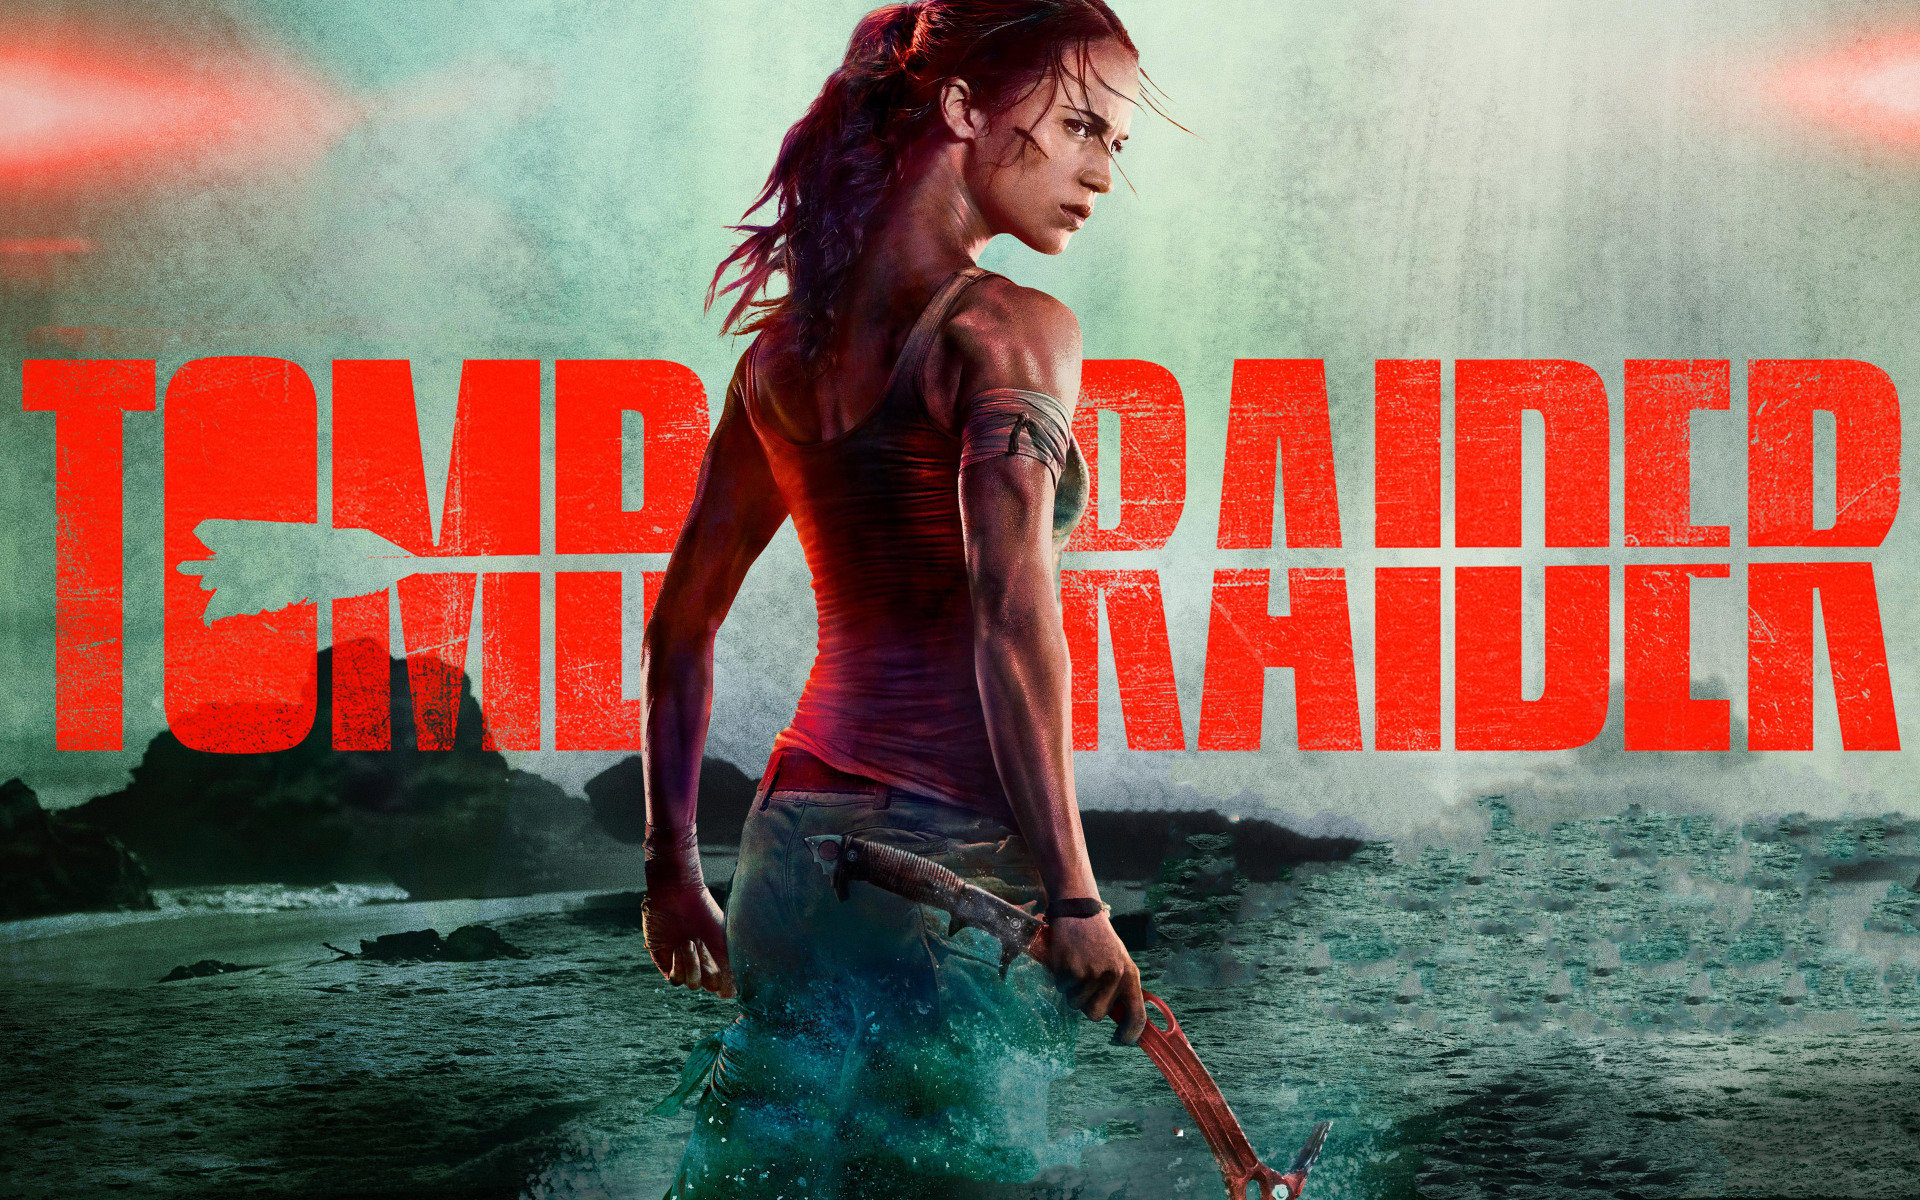 HD Wallpaper with Alicia Vikander in Tomb Raider. Movie trailers